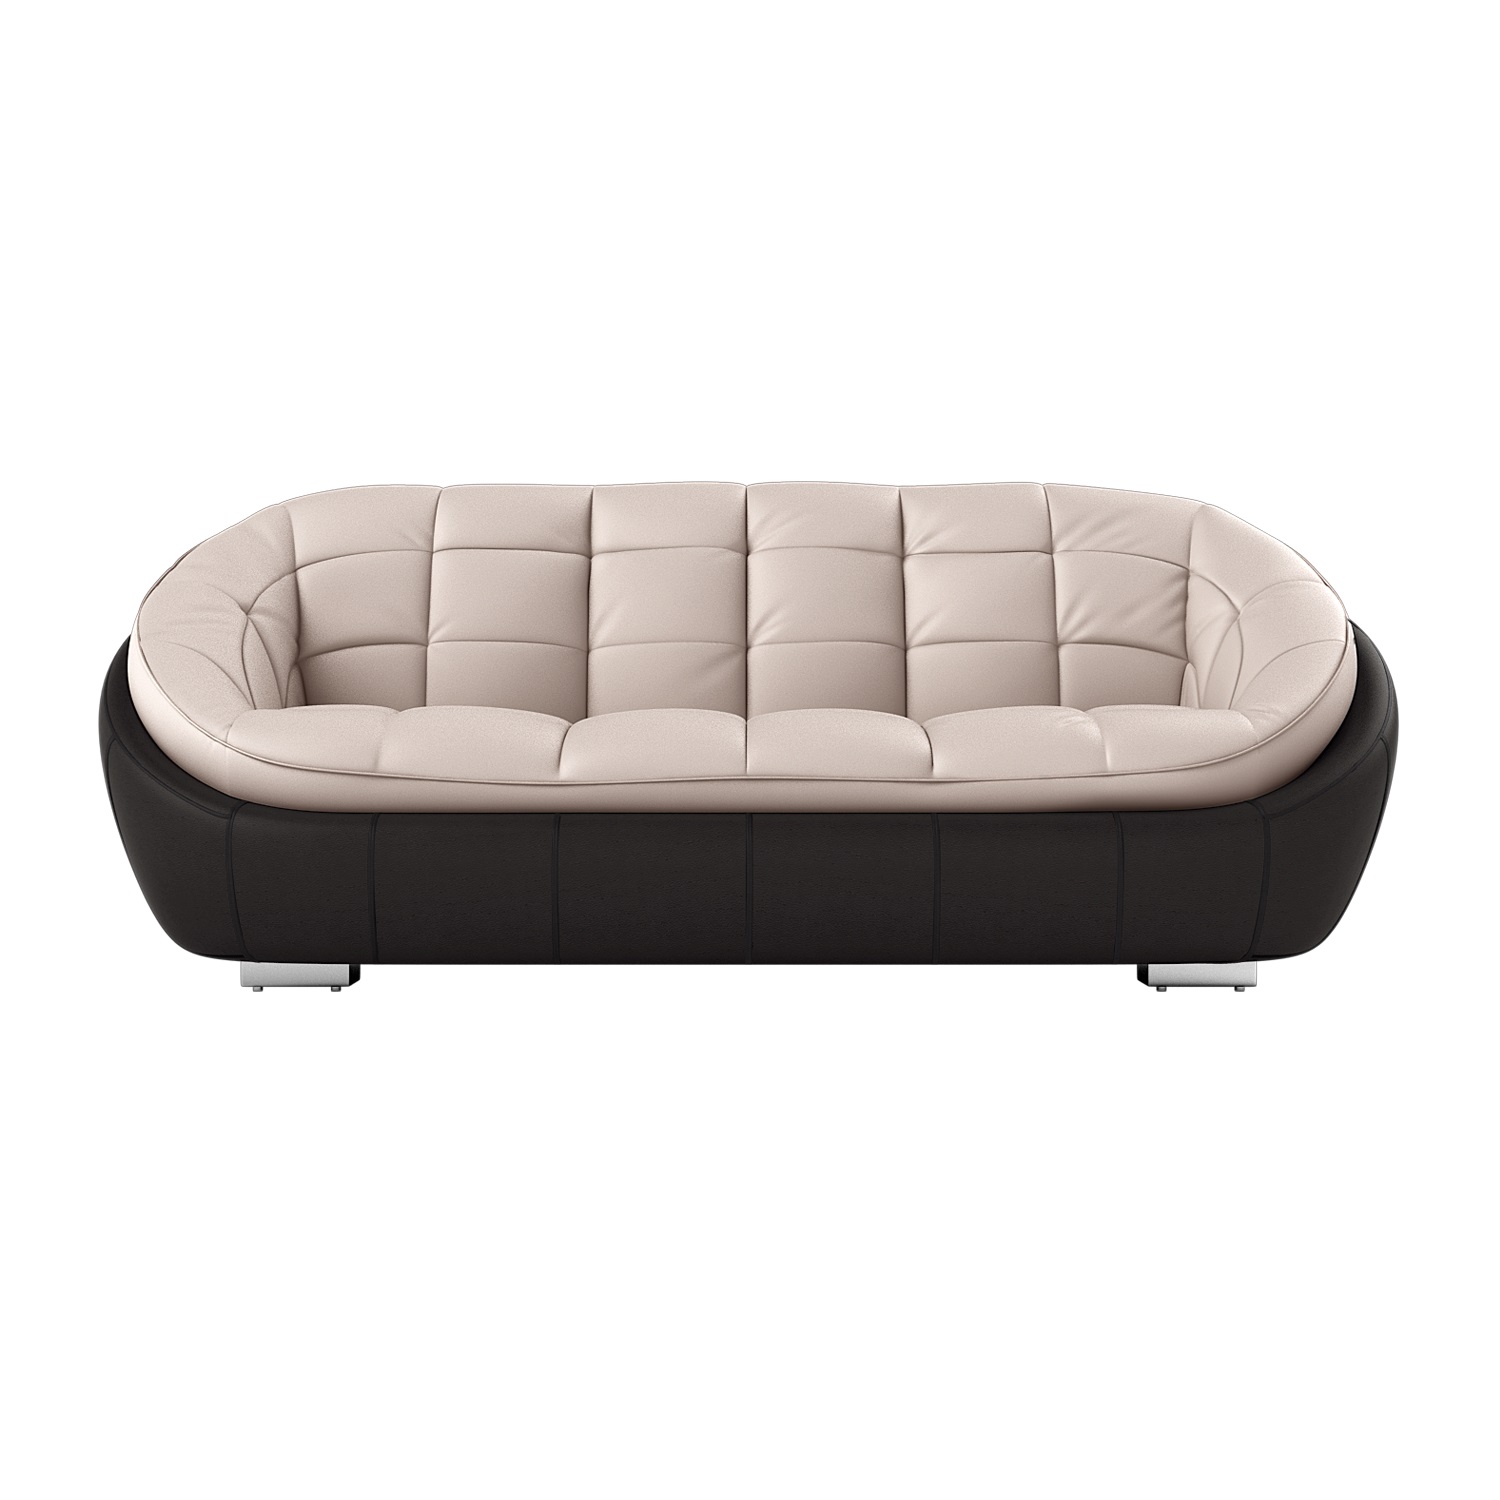 Advance 3 Sitter Leather Sofa